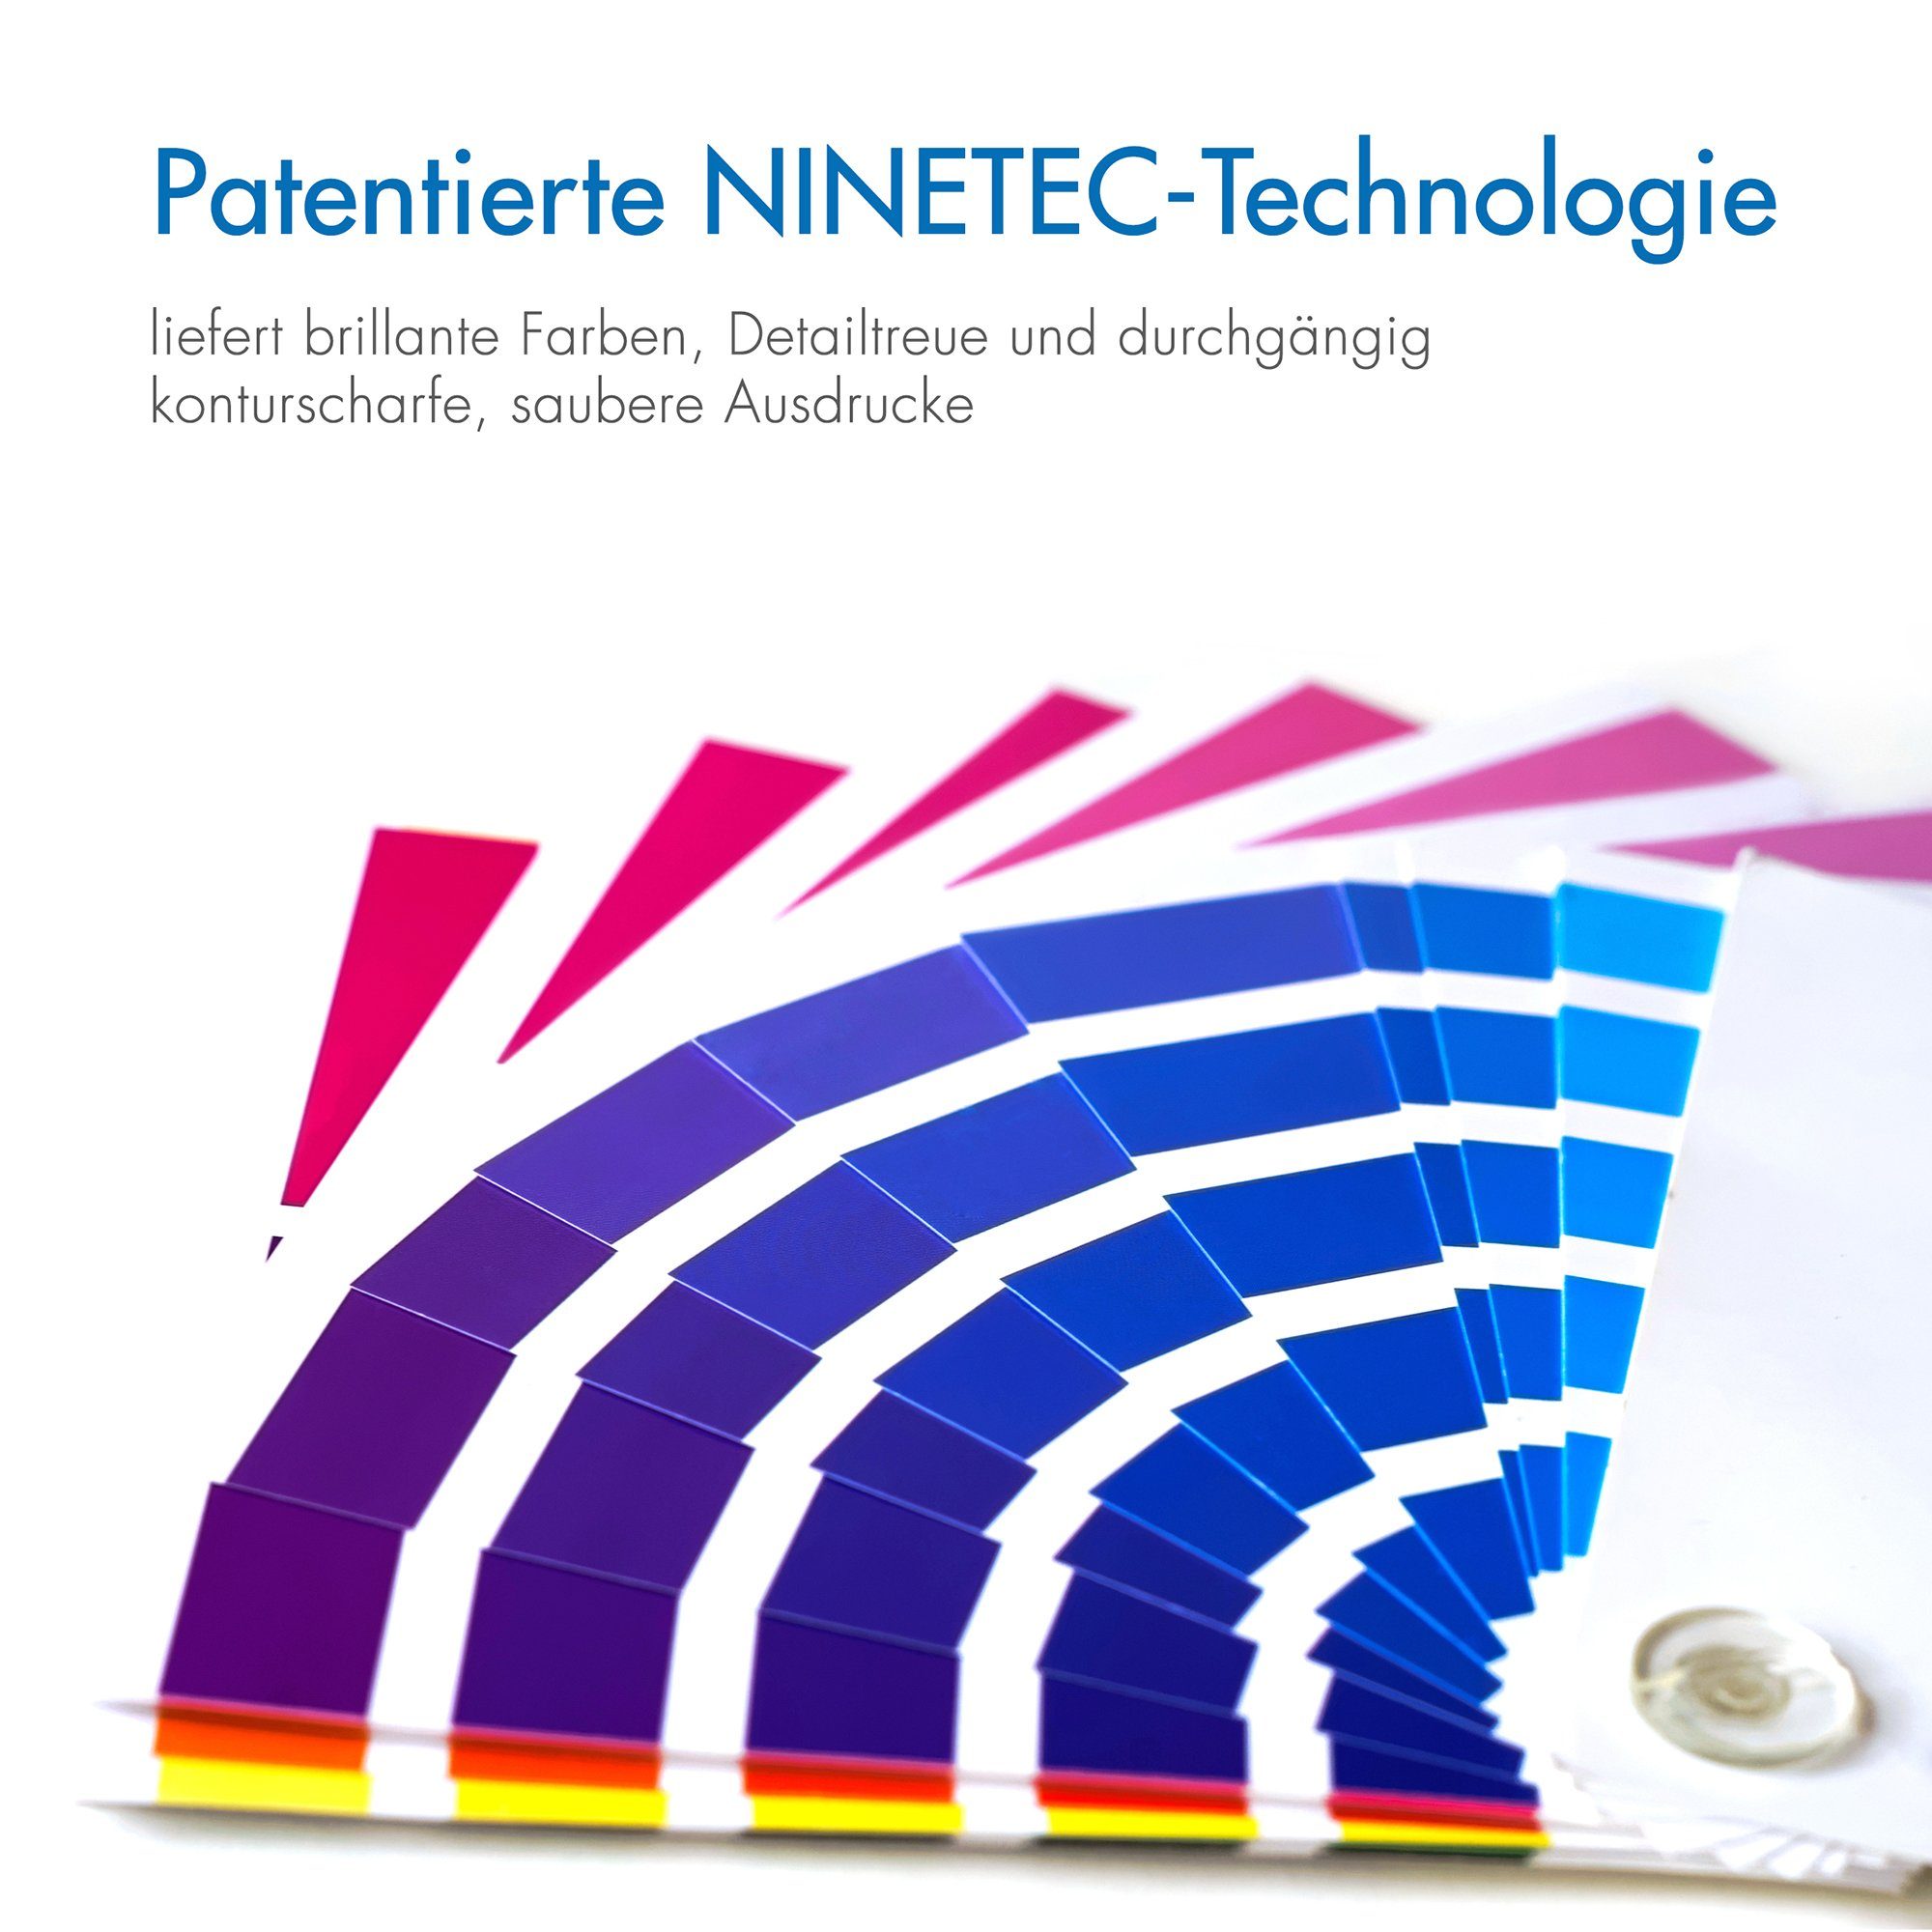 Set Tintenpatrone ersetzt Epson T1811-T1814 NINETEC 4er